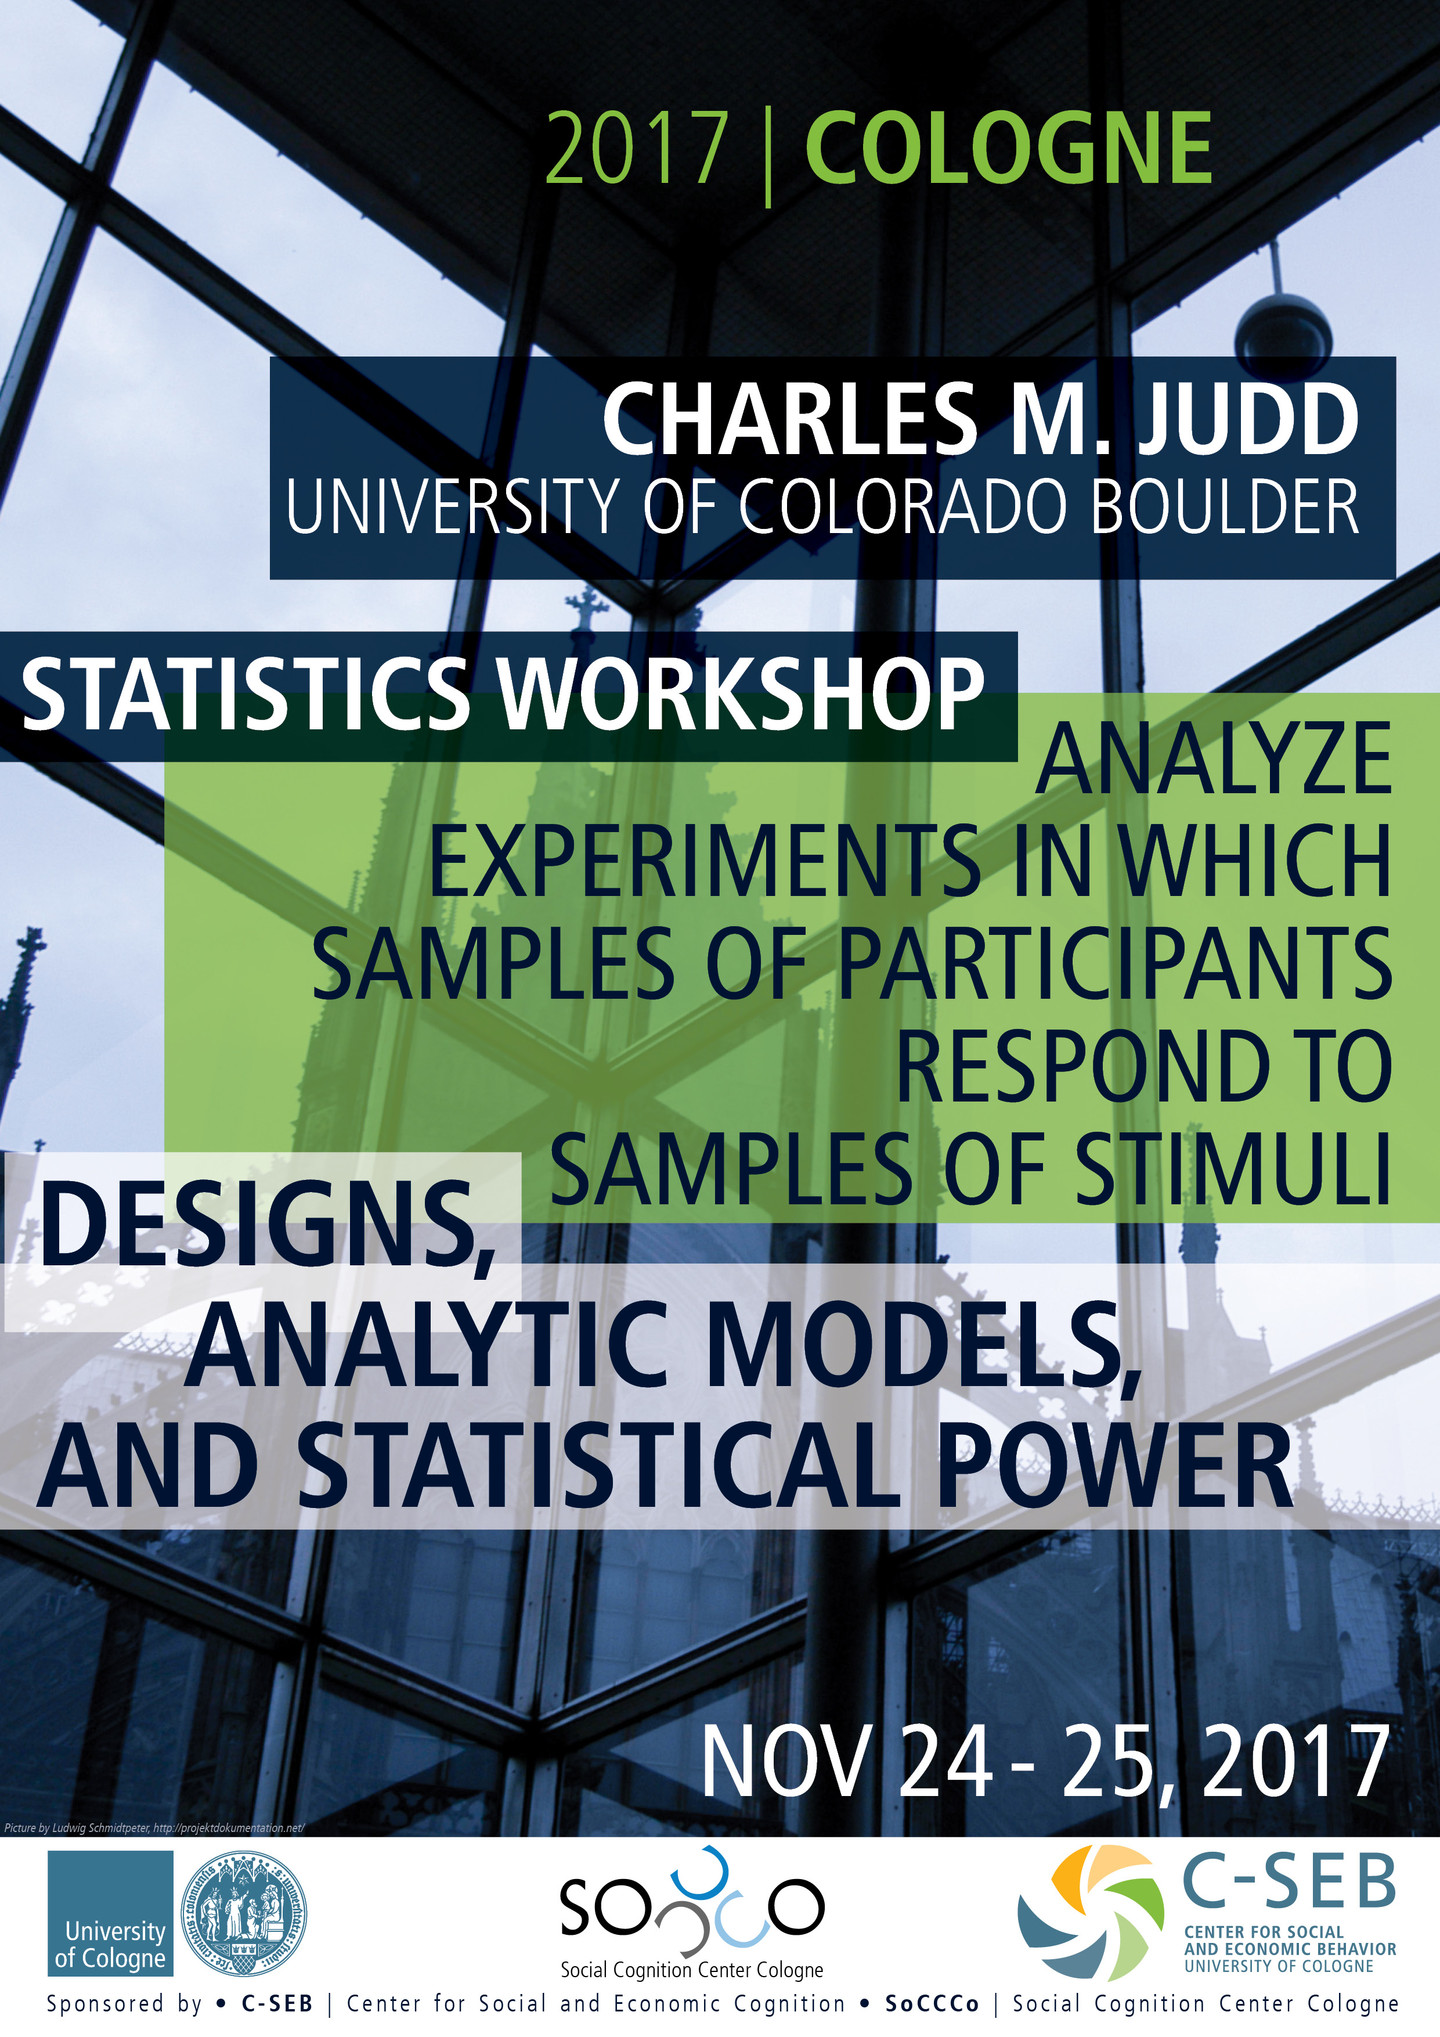 Statistics Workshop | Charles M. Judd